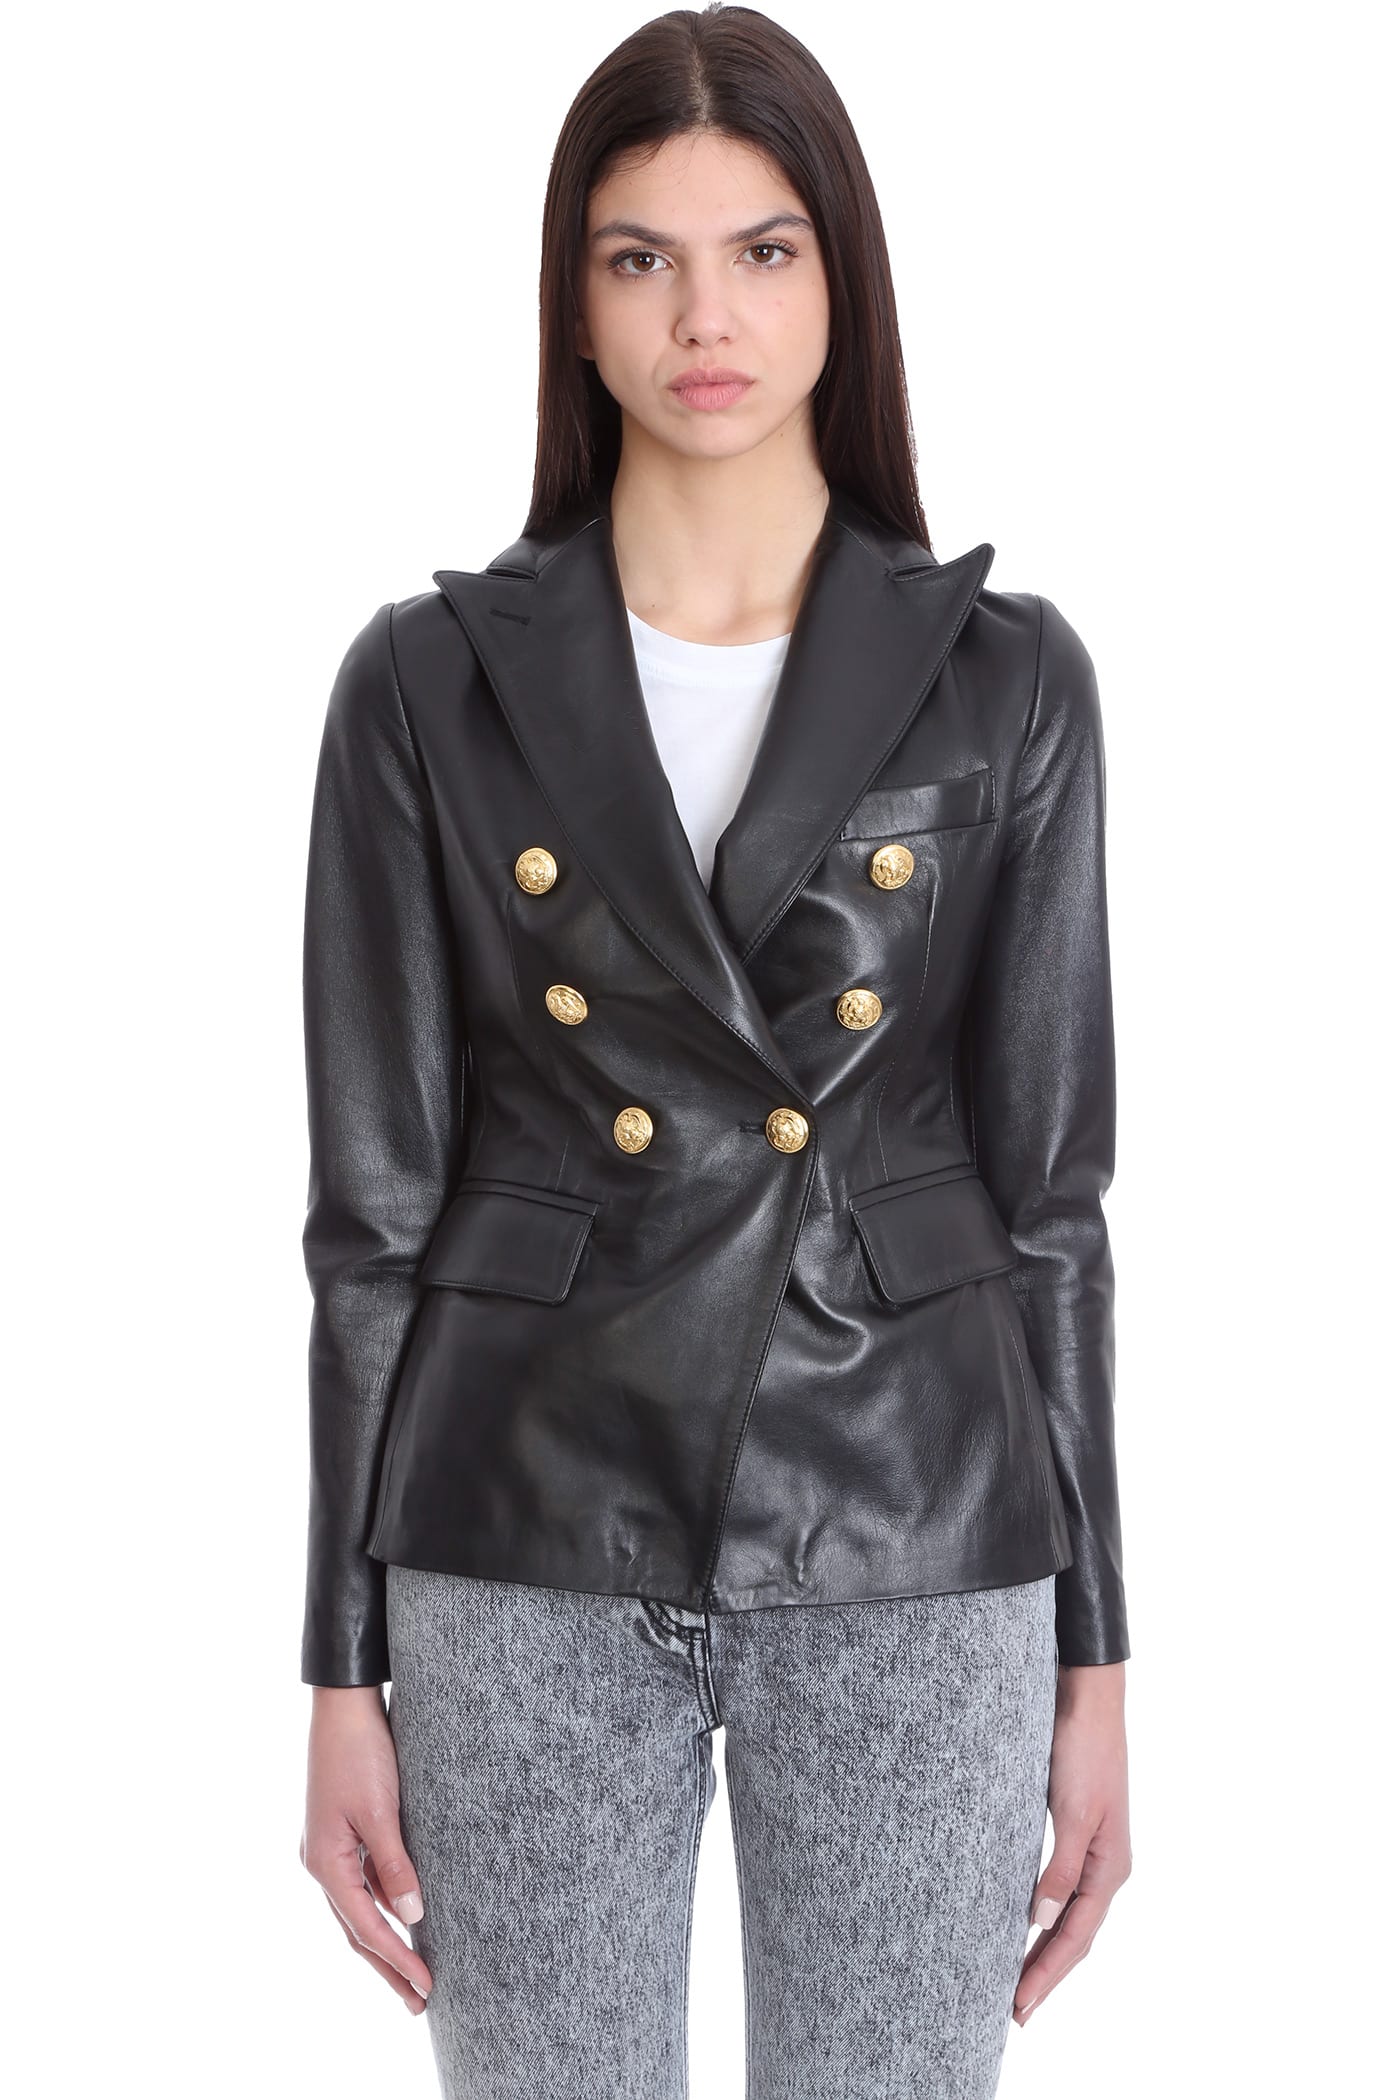 Tagliatore 0205 Jacket In Black Leather